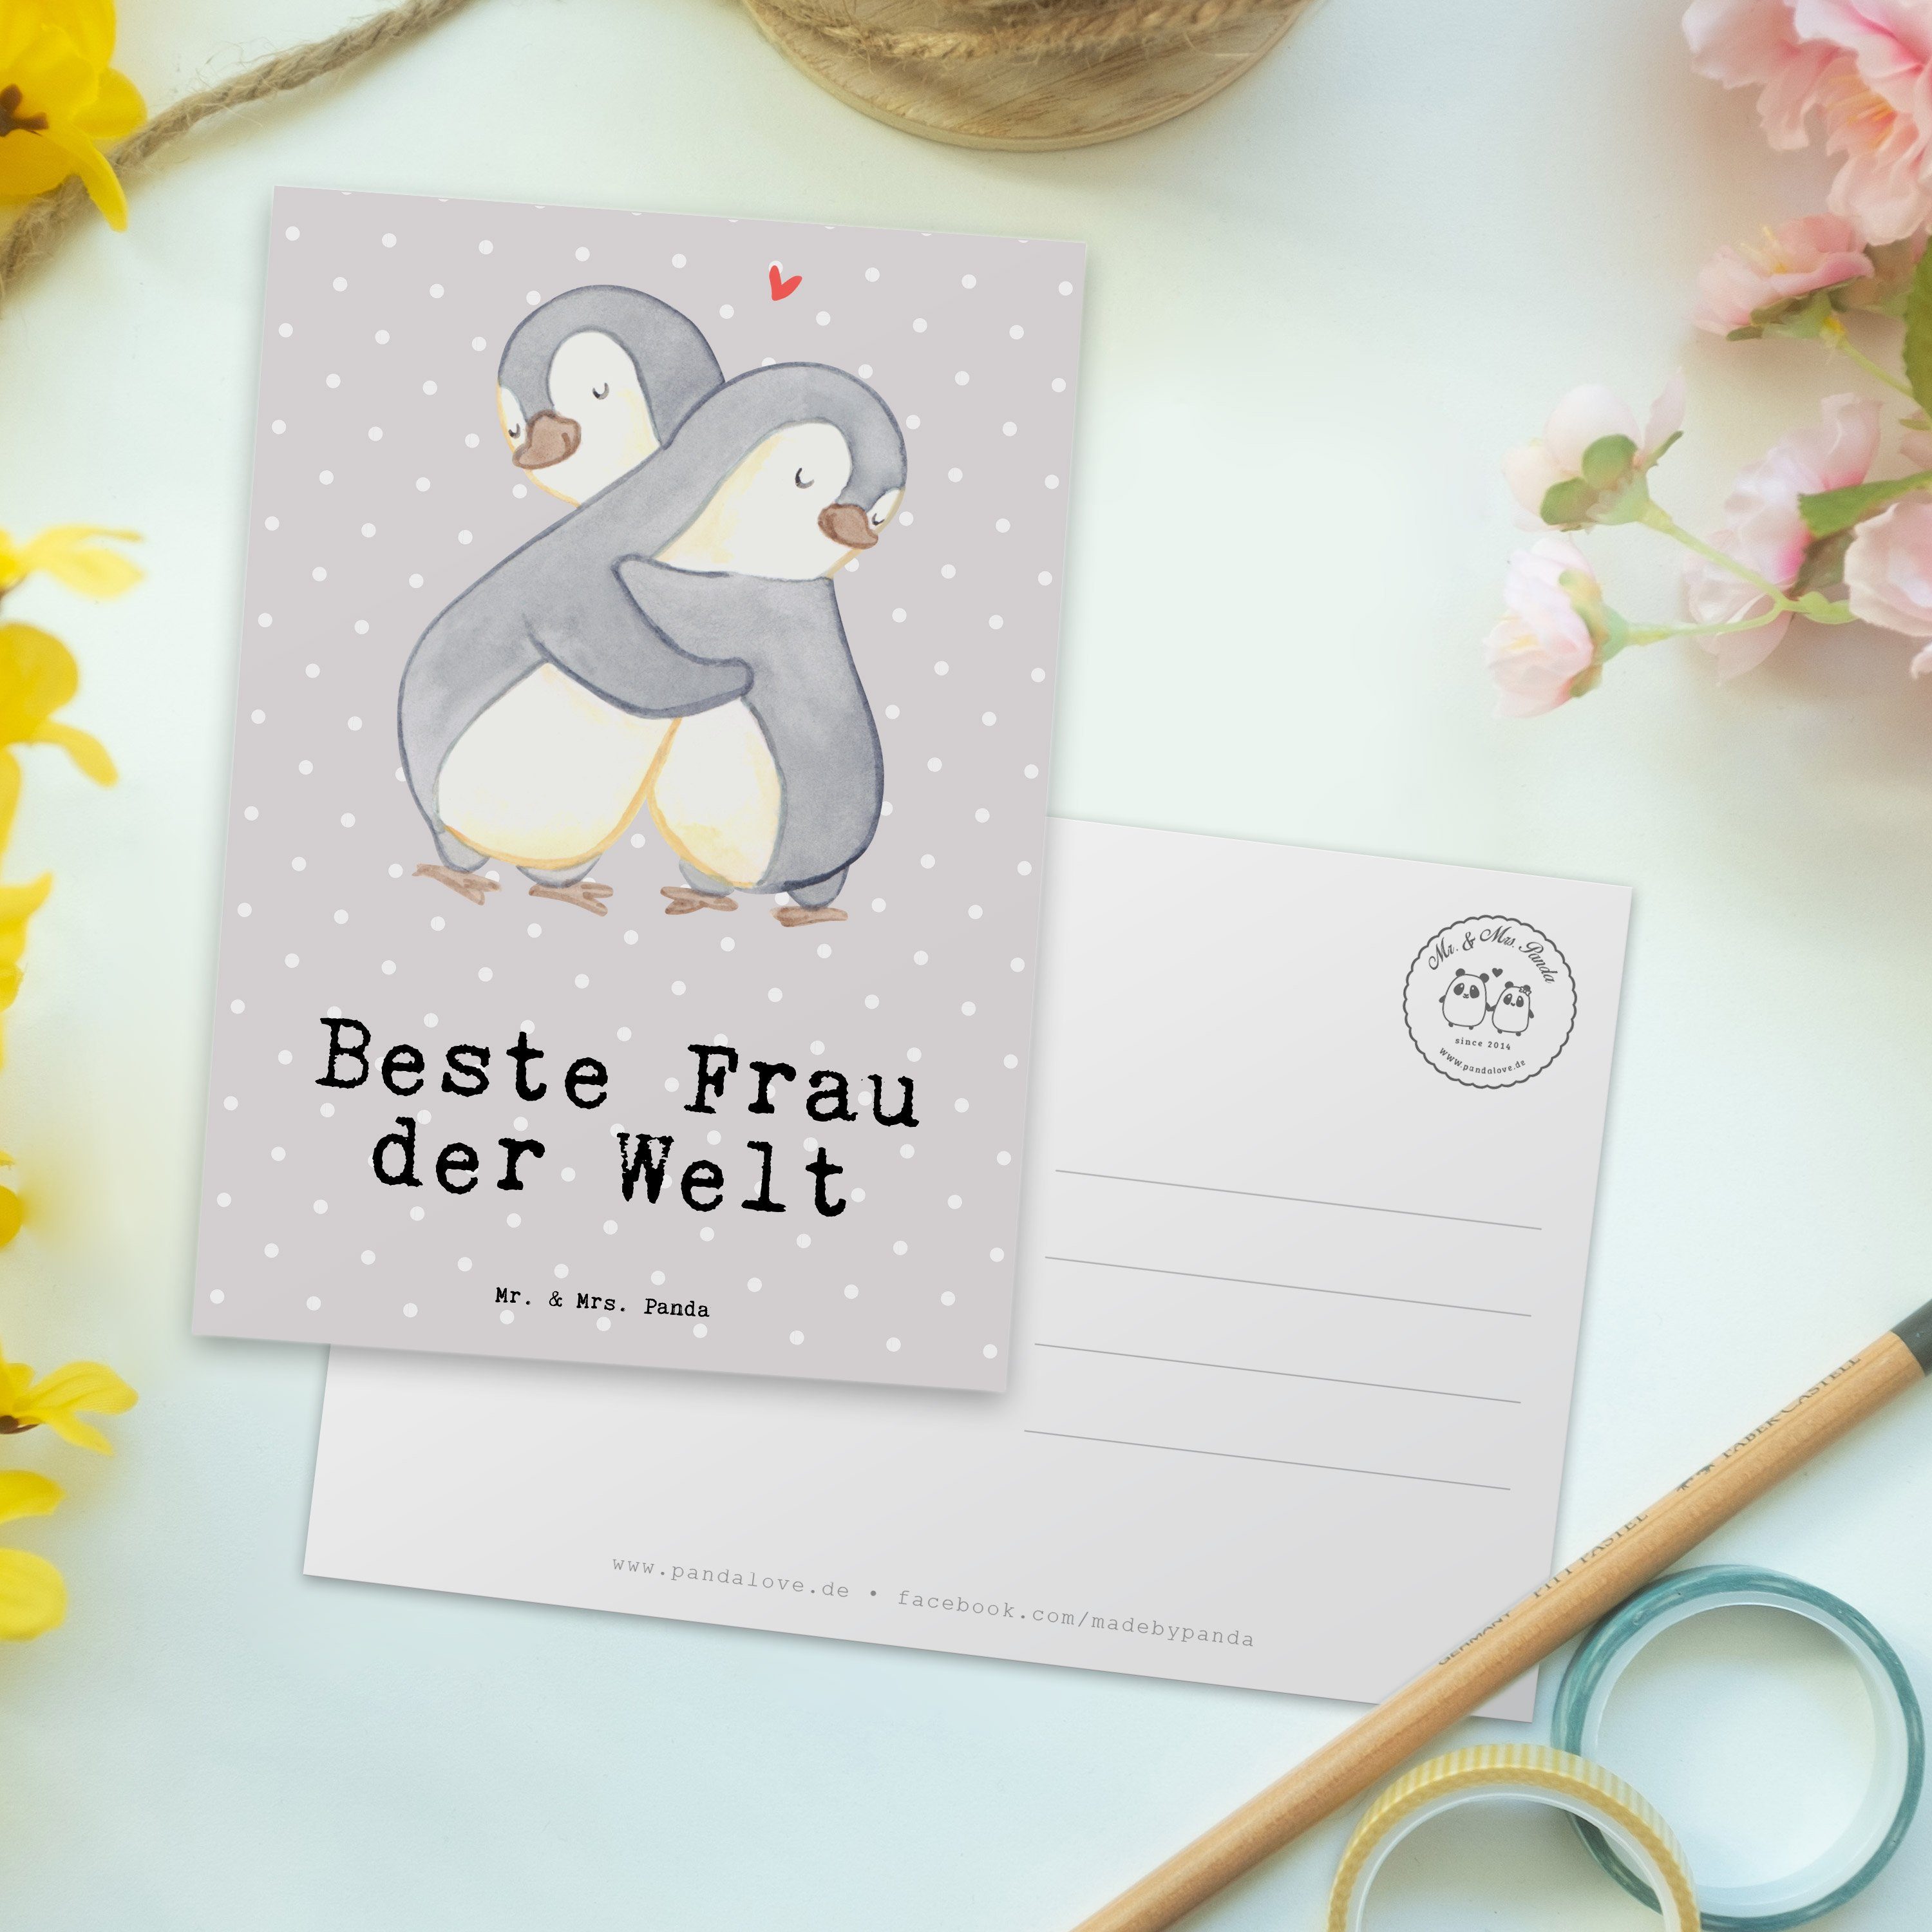 Pinguin Geschenk, der - Panda Mrs. Welt & - Grau Gesch Ehefrau, Pastell Postkarte Beste Mr. Frau